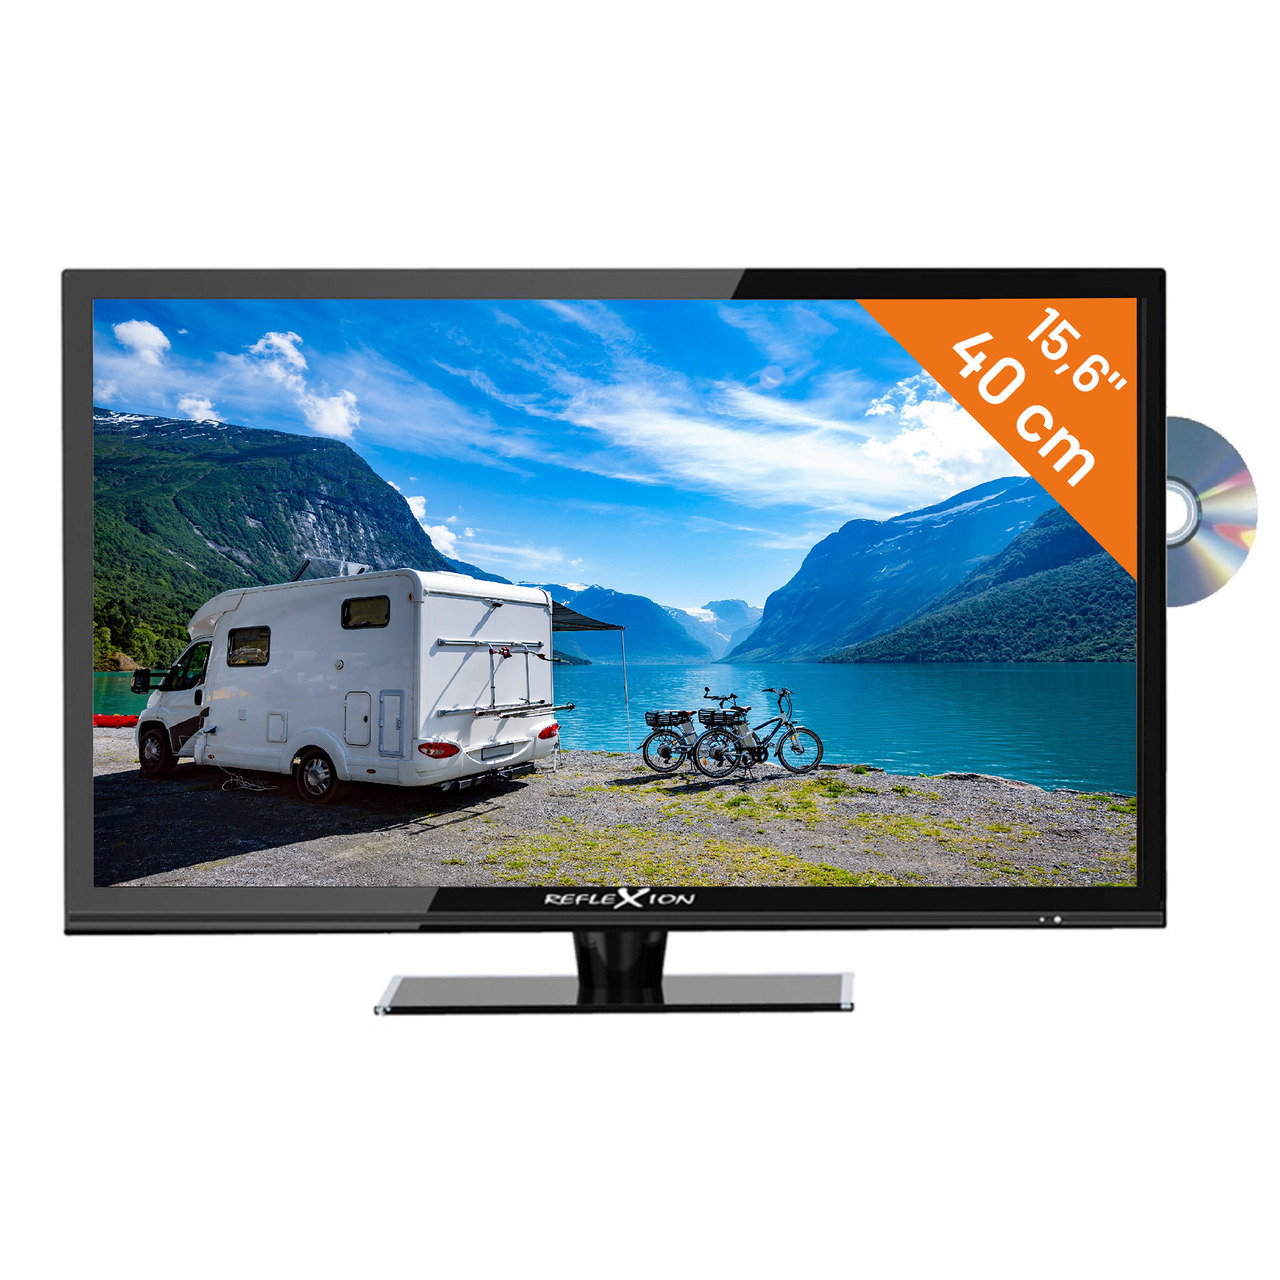 Reflexion 12-24-V-LED-TV LDDW160- 40 cm (15-6)- DVD-Player- DVB-S-S2-C-T-T2- Full-HD- Camping unter Multimedia